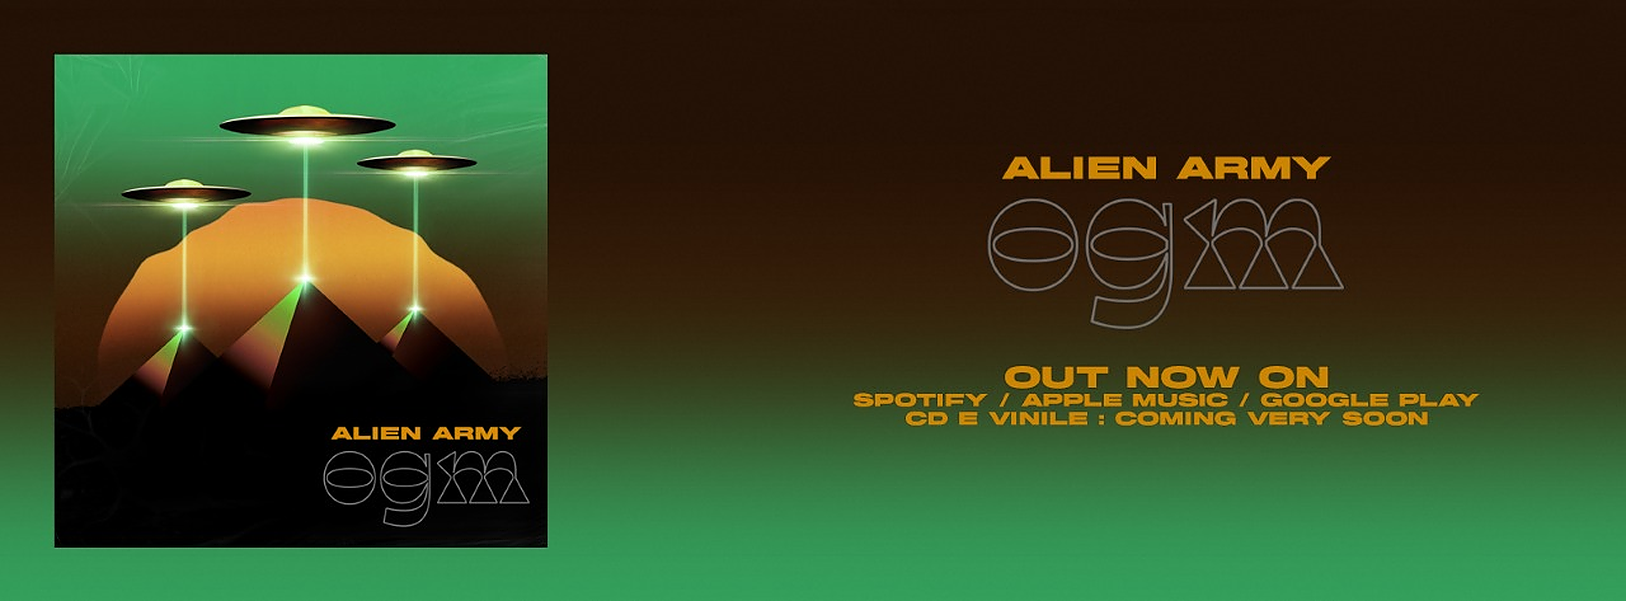 Alien Army - New album - Organismi Geneticamente Modificati (OGM) 2021